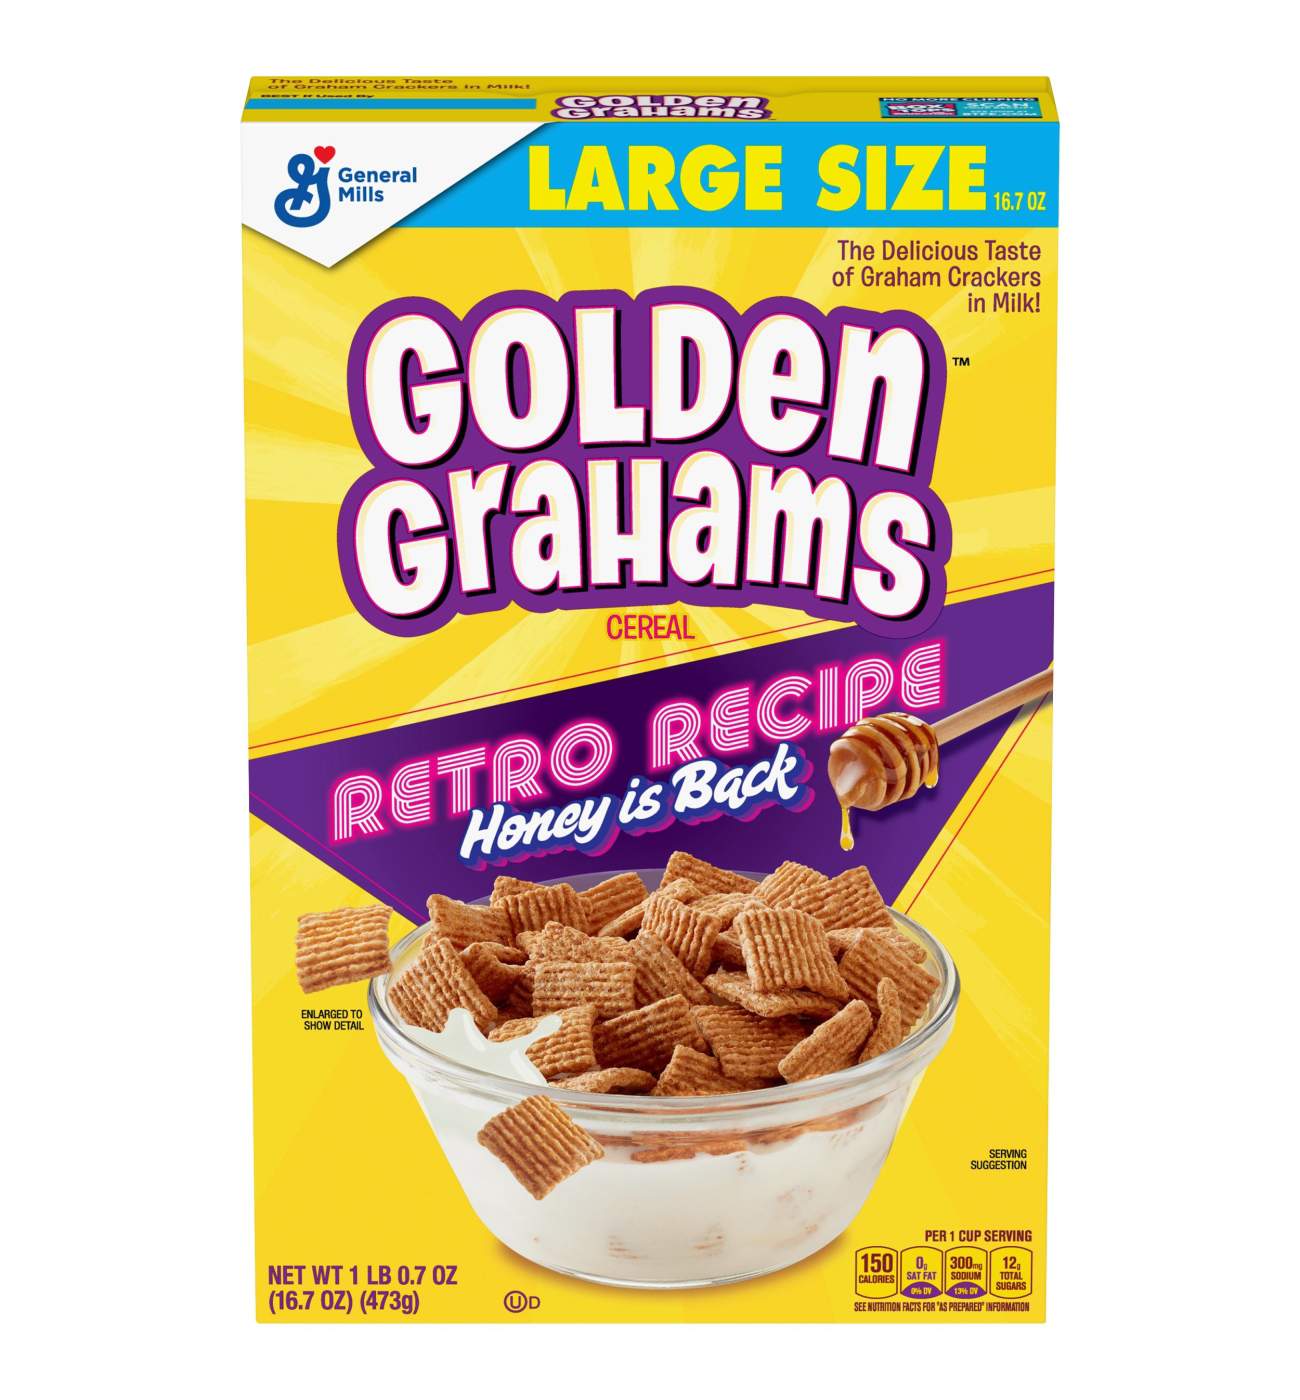 General Mills Golden Grahams Cereal; image 1 of 2